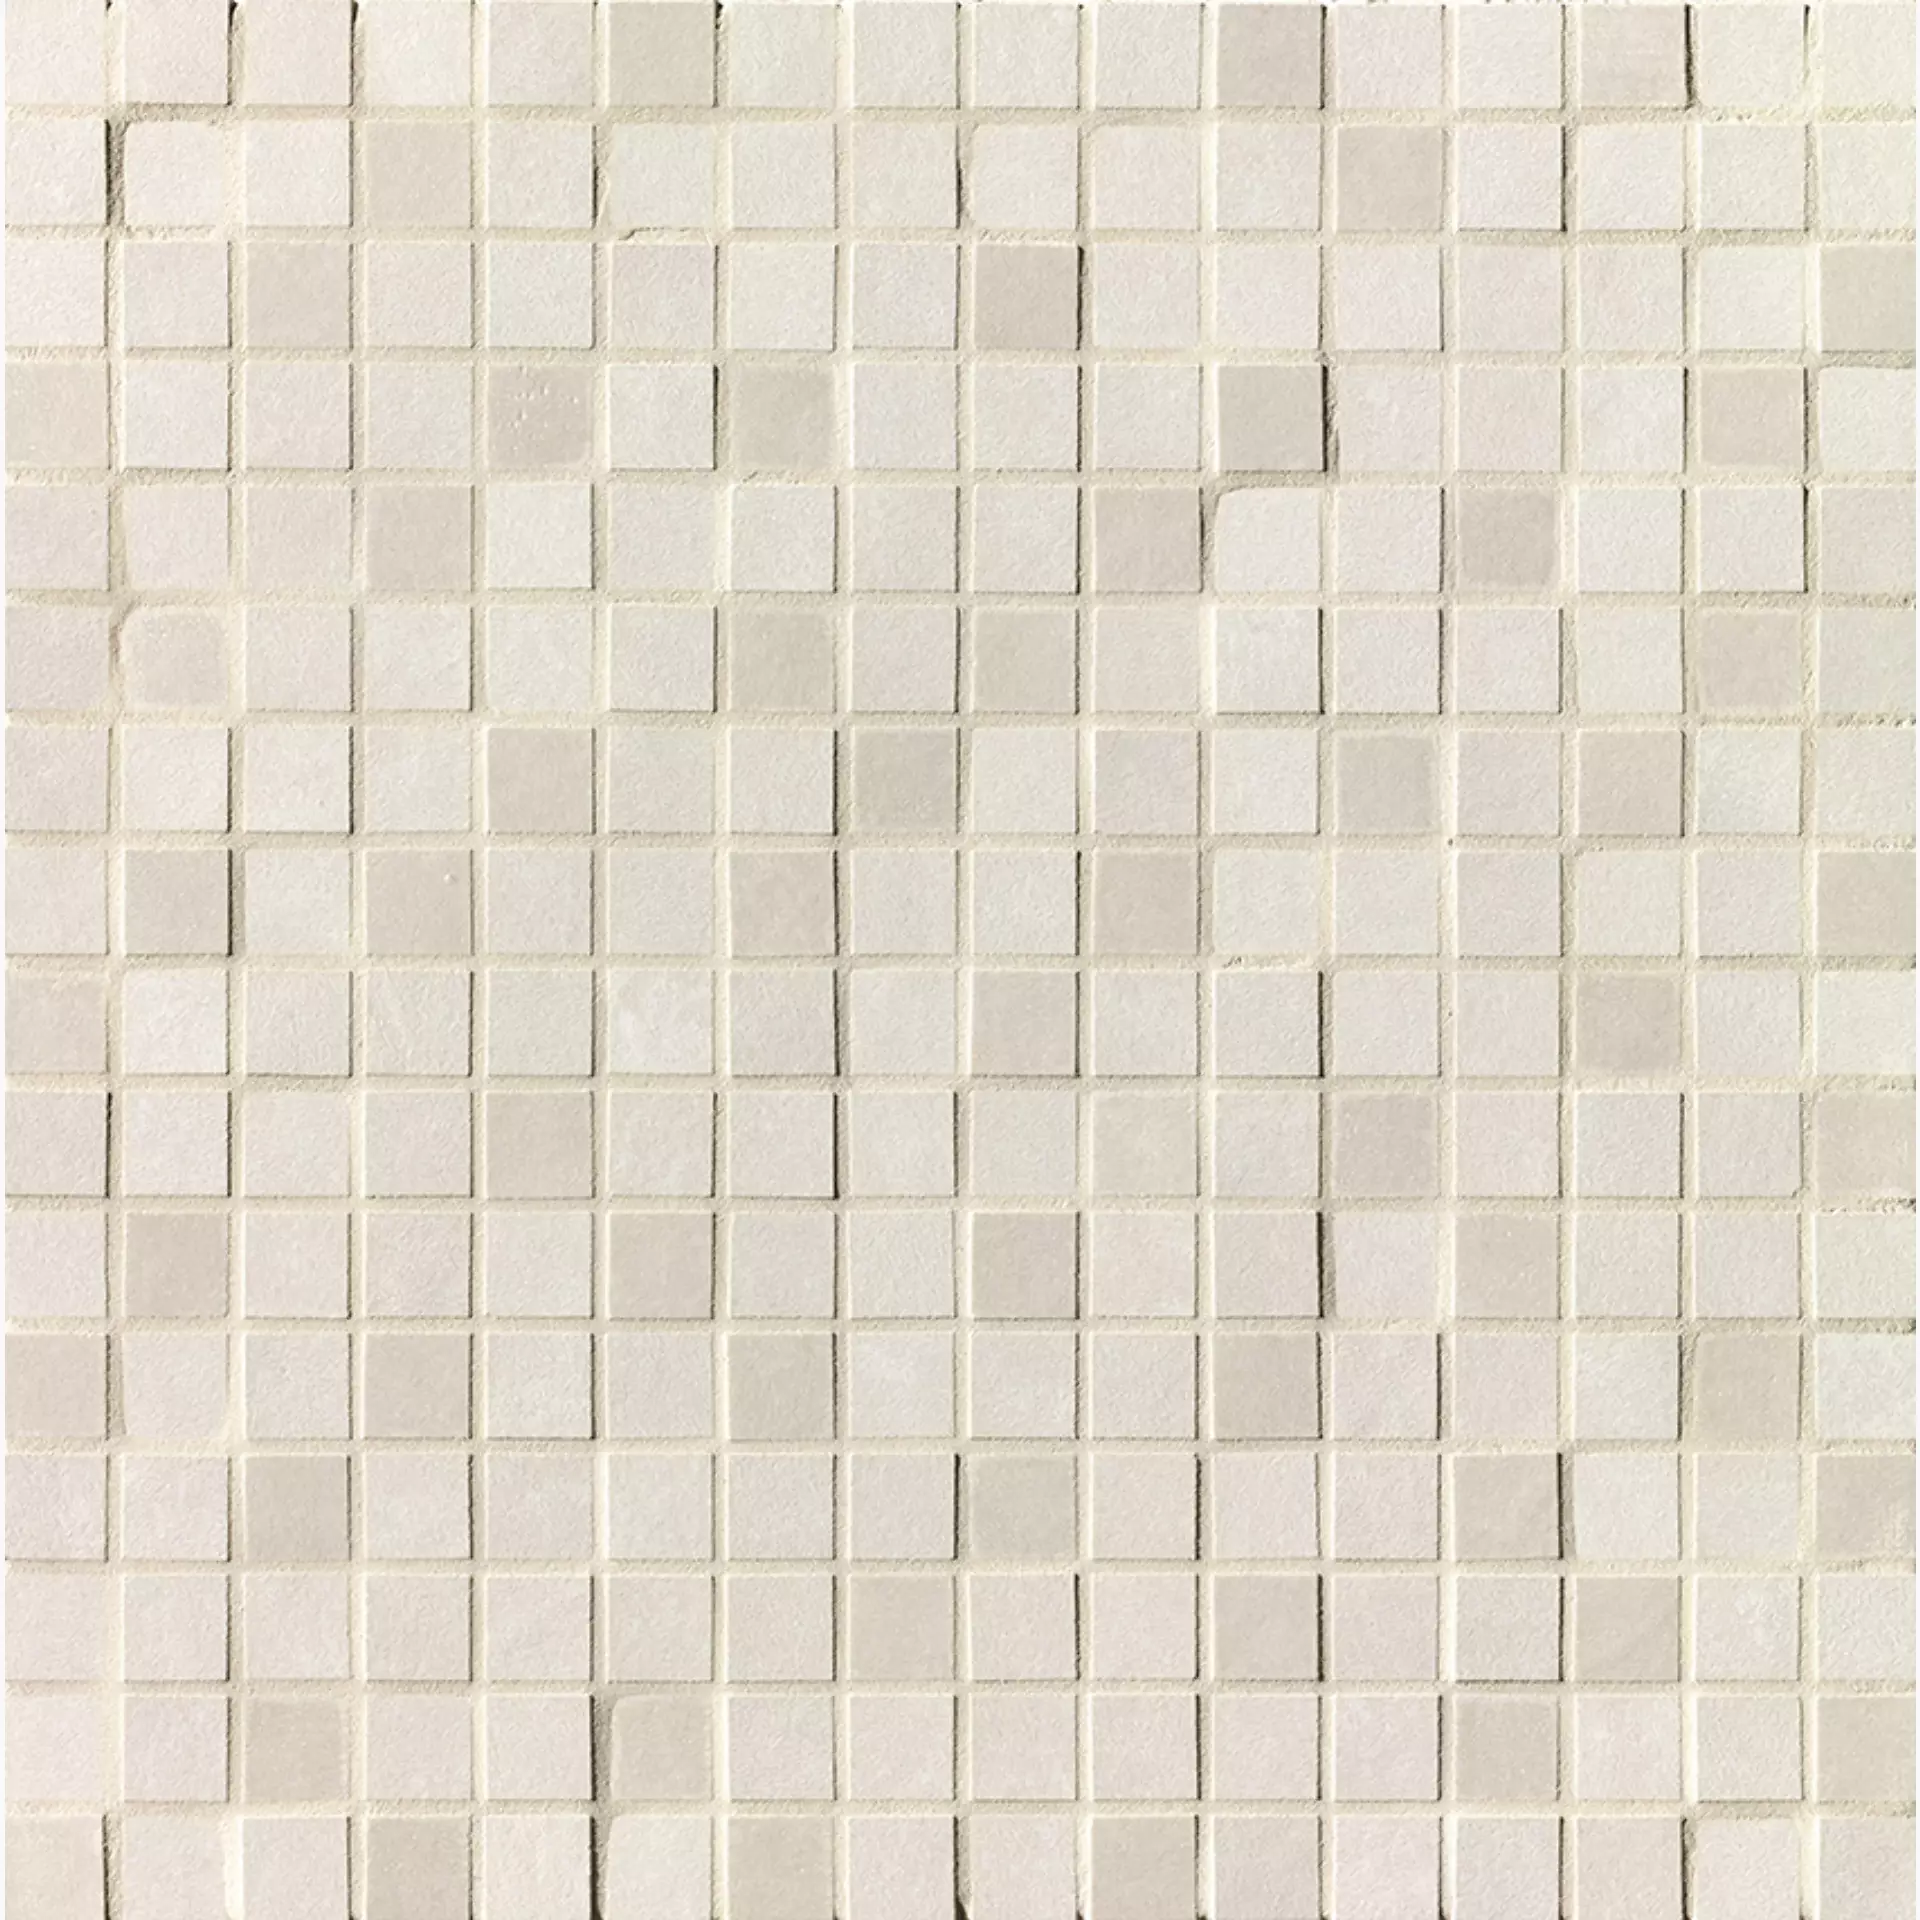 FAP Bloom White Matt White fOWY matt 30,5x30,5cm Mosaik